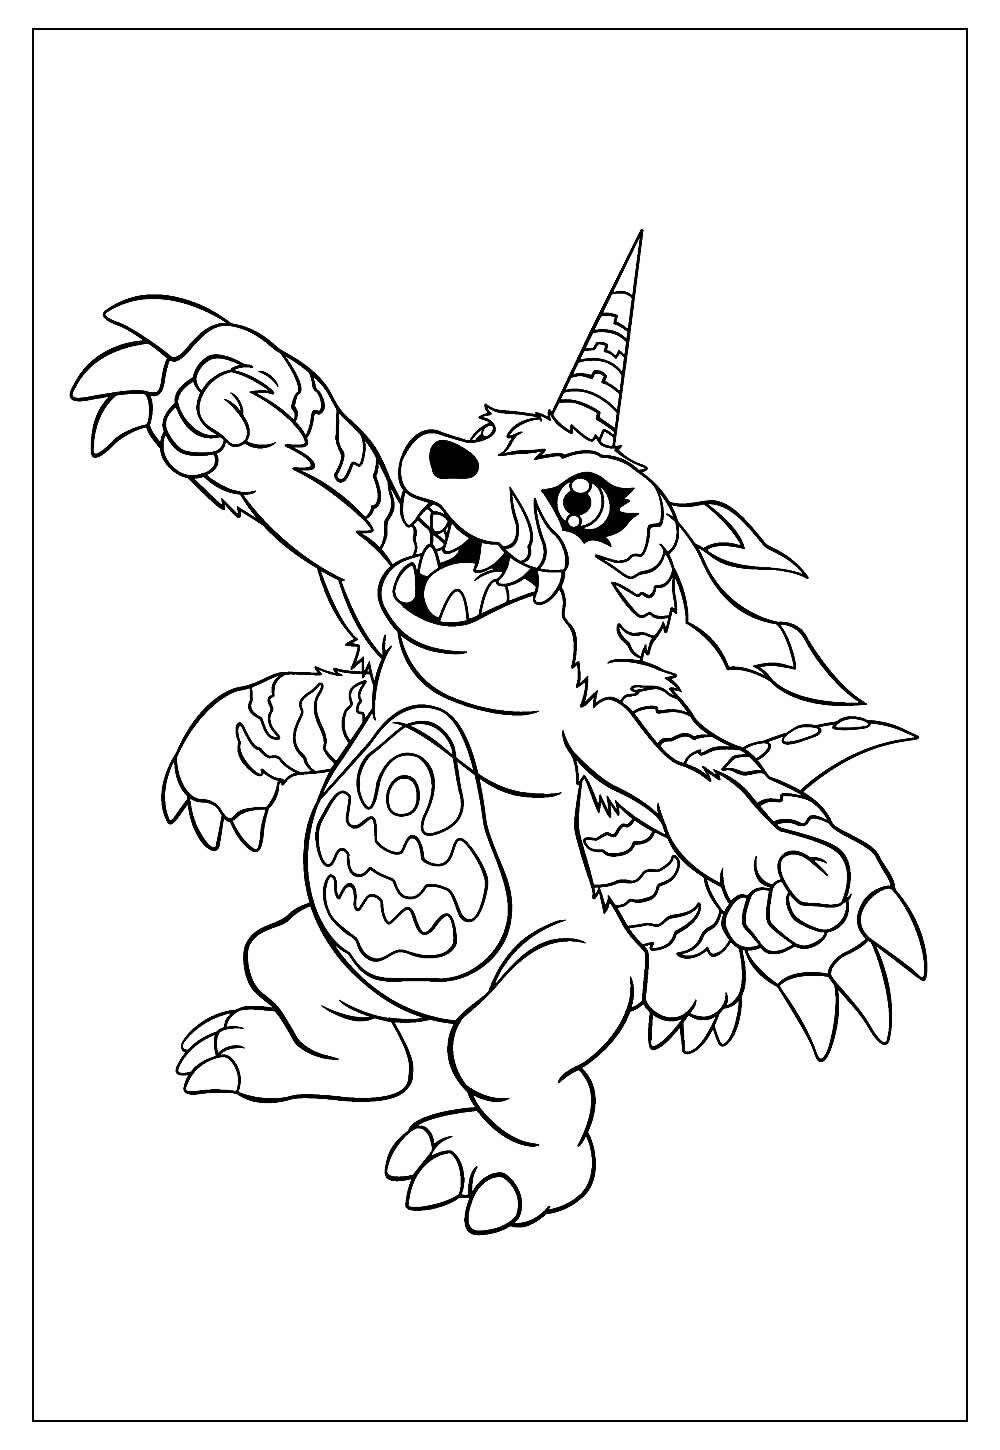 Desenho de Digimon para colorir